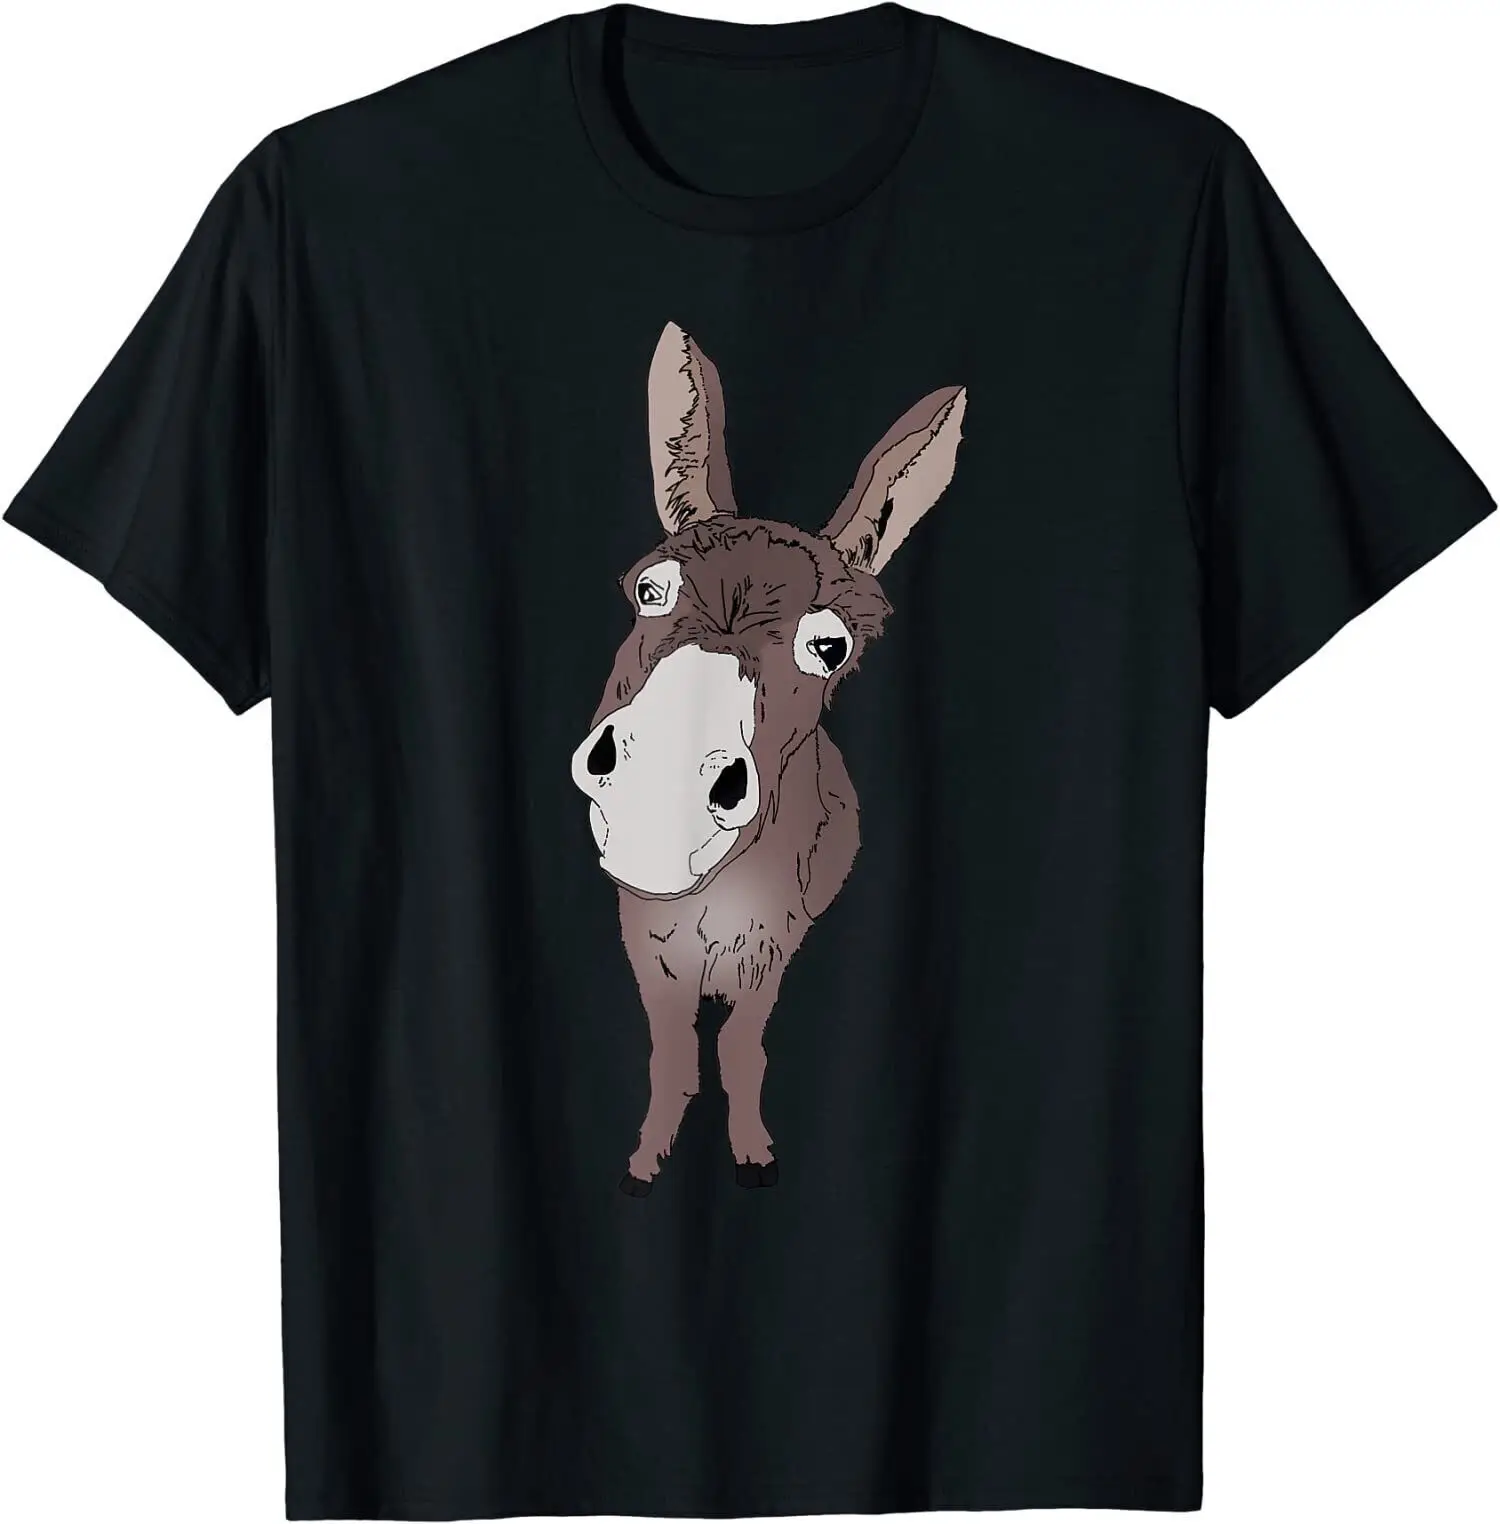 Funny Looking Donkey Cute Gift Idea O-Neck Cotton T Shirt Men Casual Short Sleeve Tees Tops Harajuku Streetwear